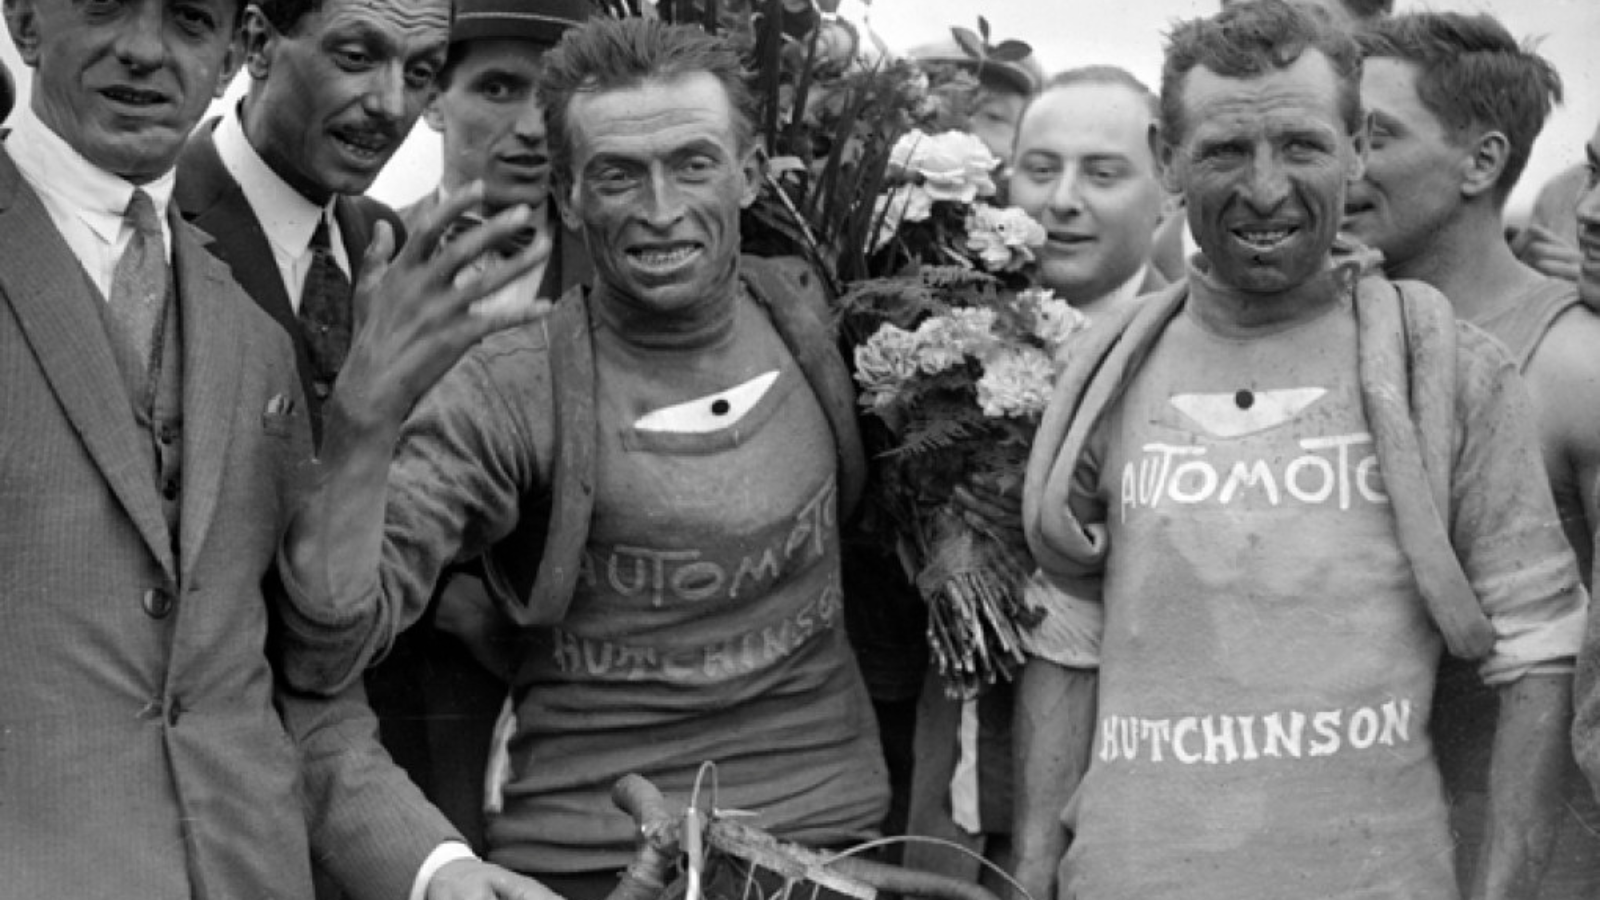 Tour de France winner Ottavio Bottecchia is celebrated